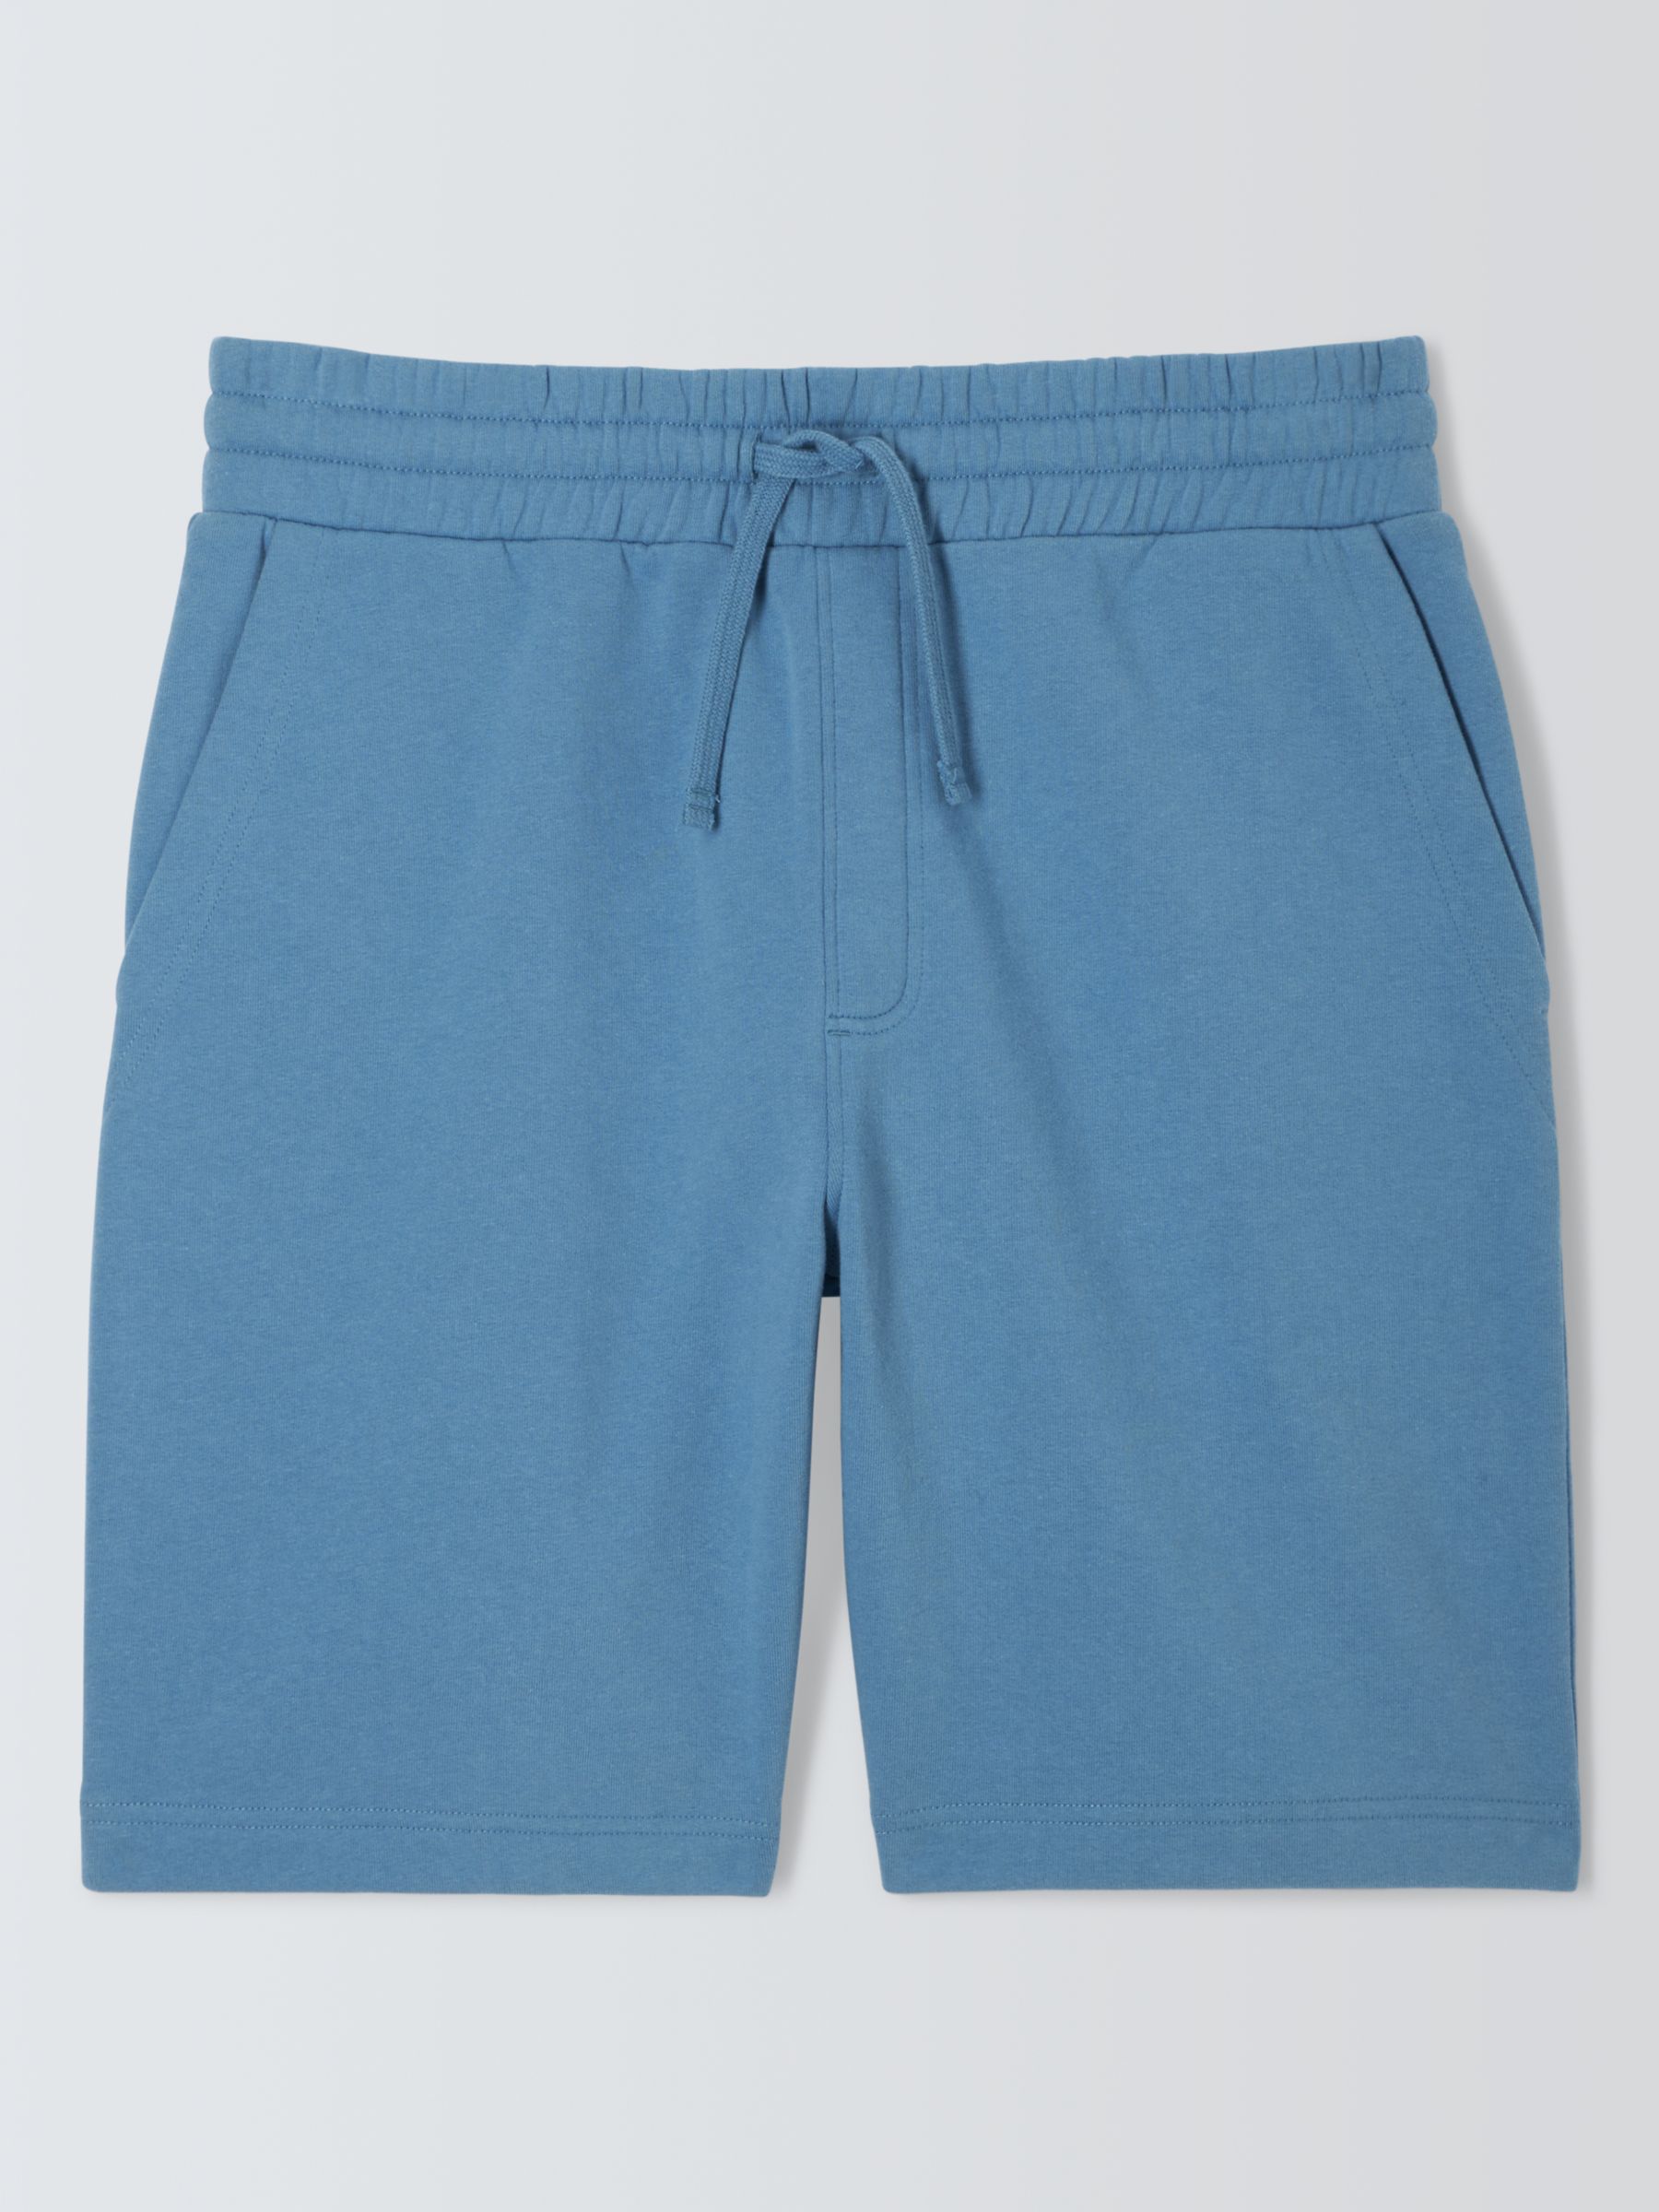 John Lewis ANYDAY Sweat Shorts, Blue, L